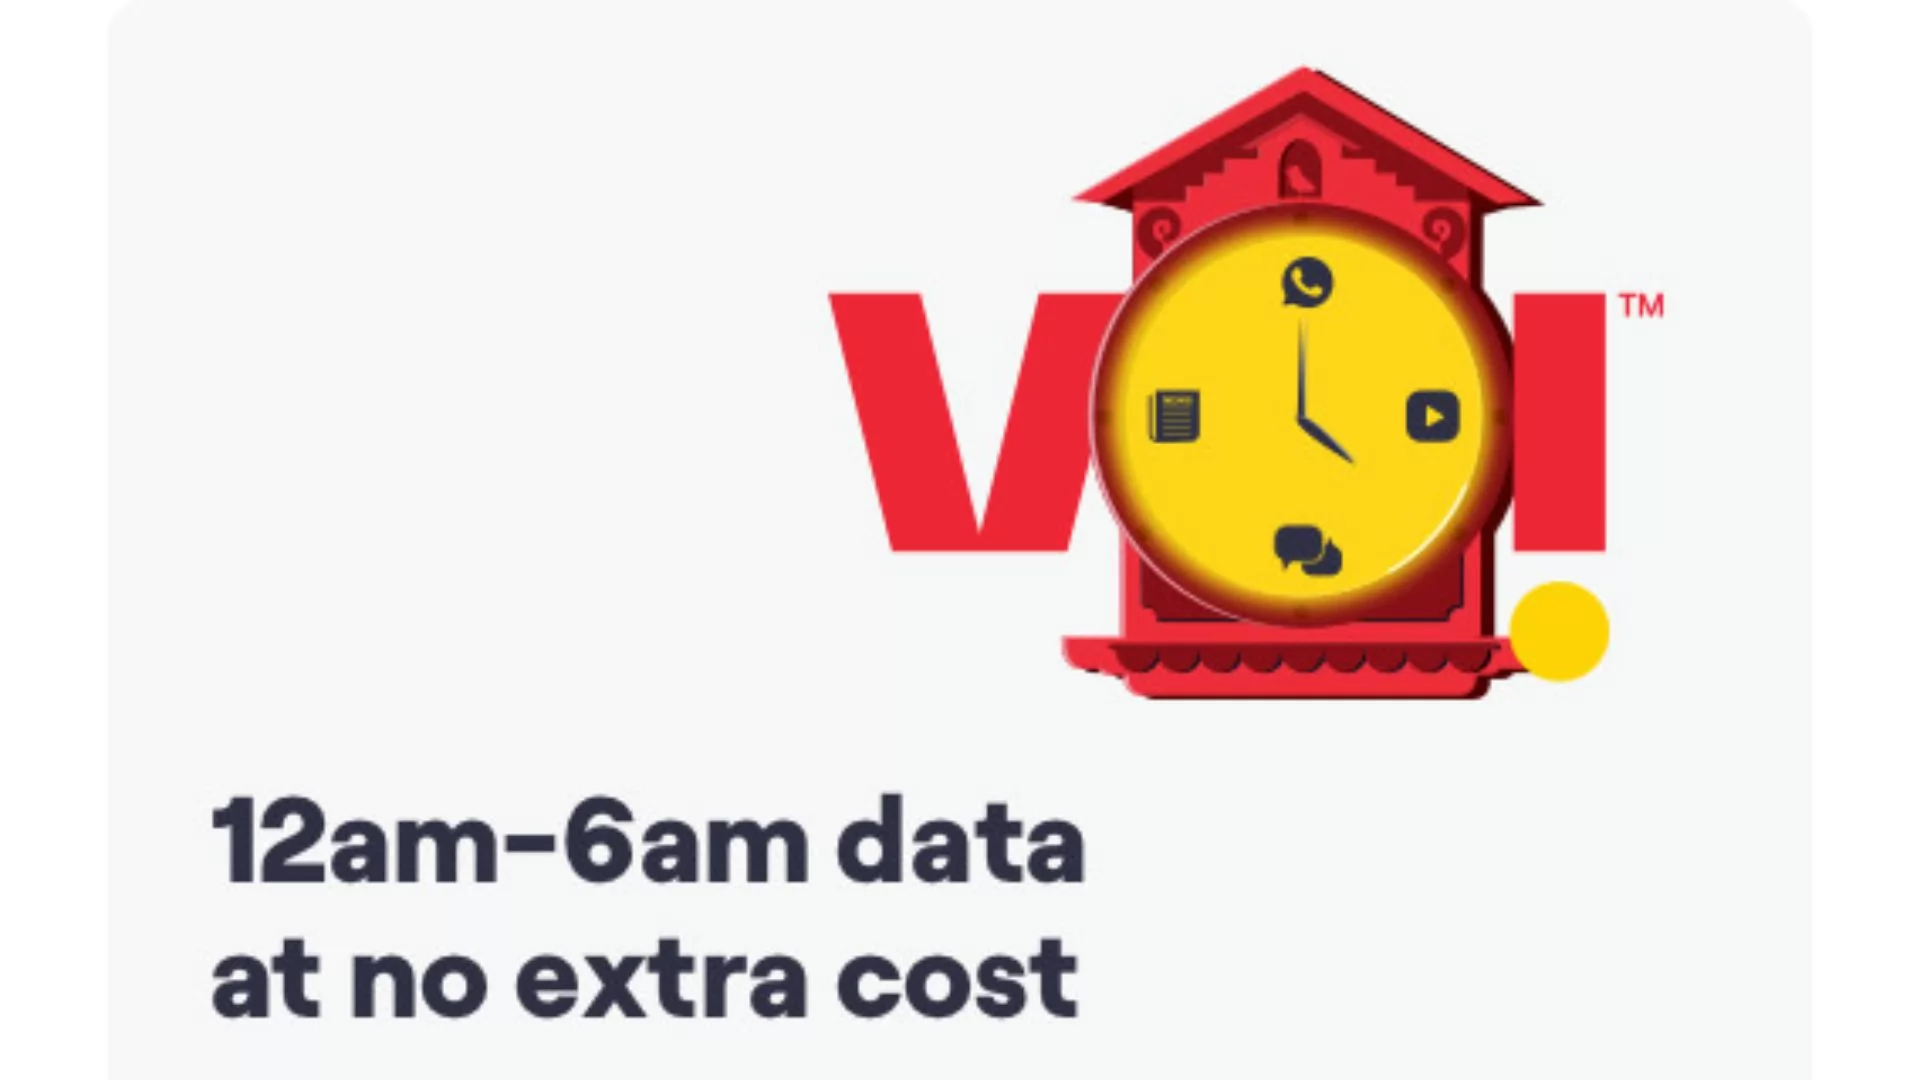 Vi Night Unlimited data offer